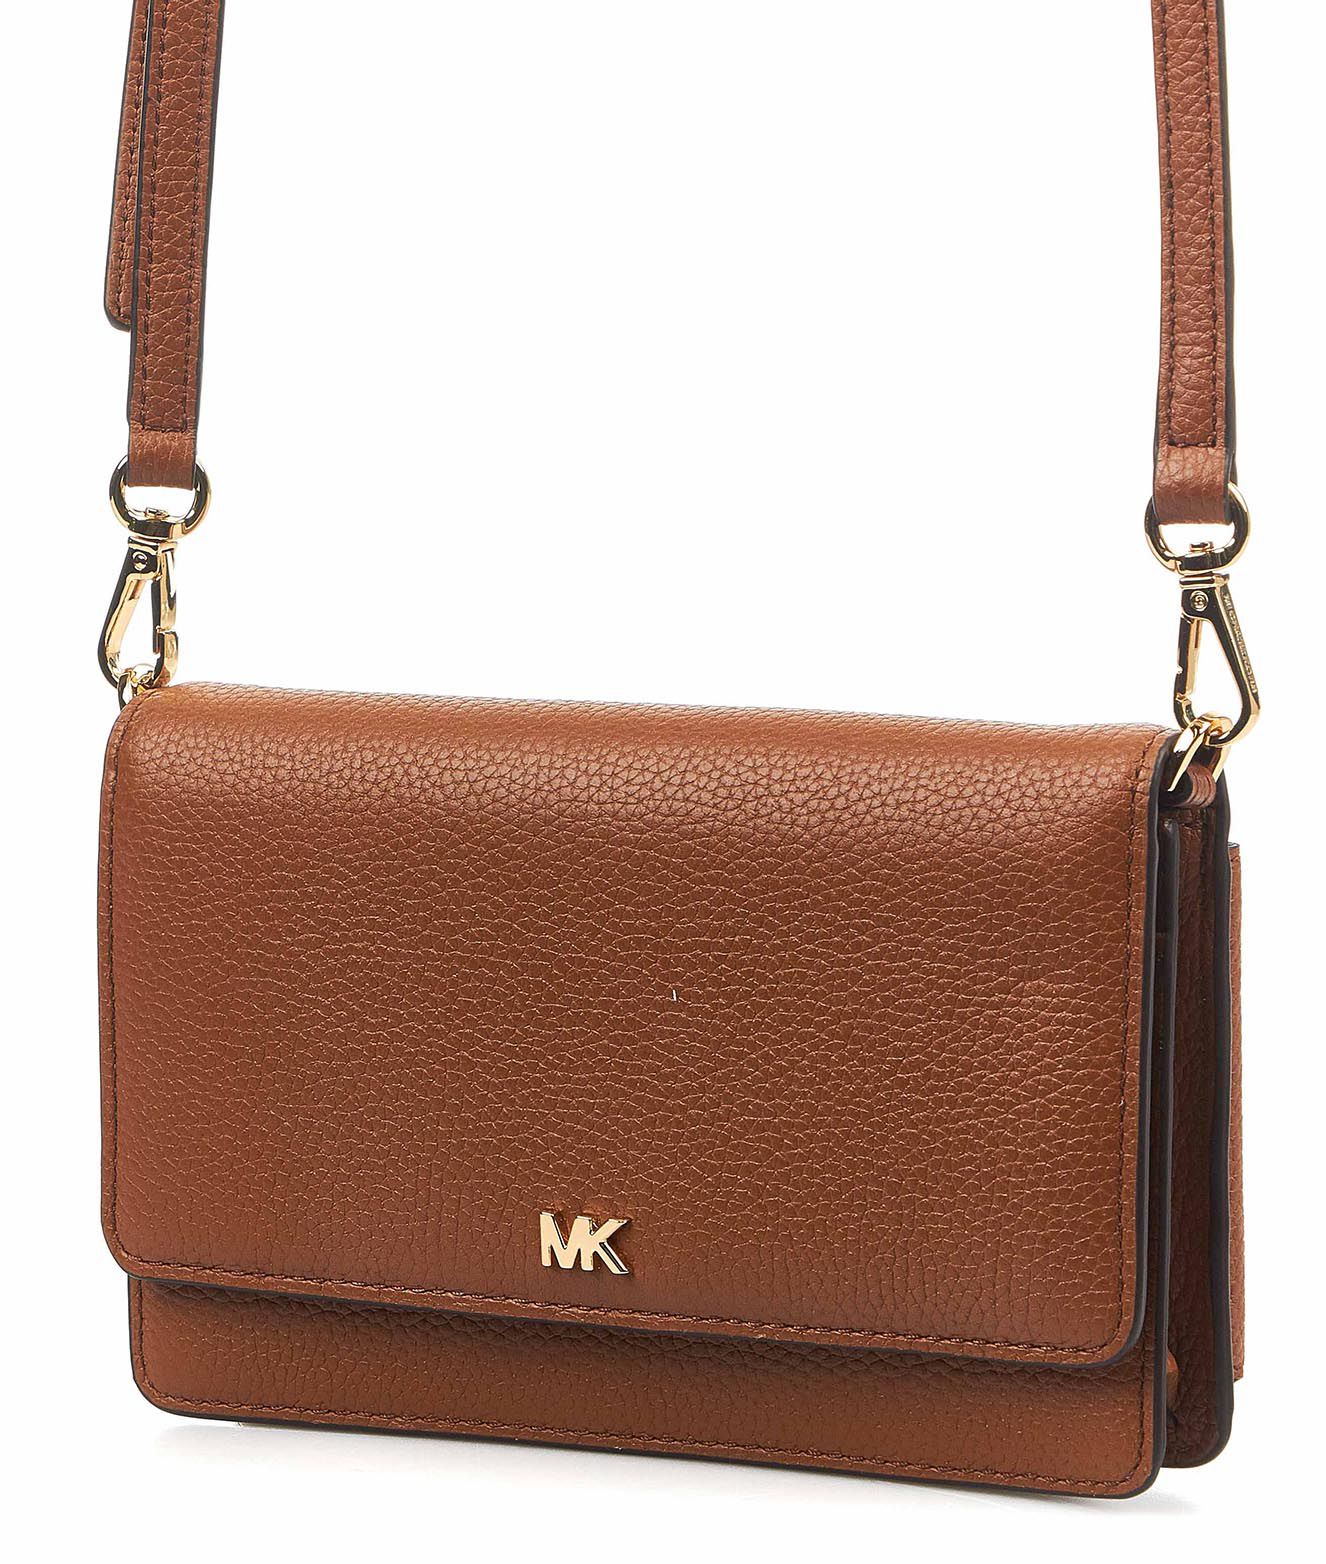 MICHAEL KORS Women's Bags Cross Body Brown NIB Authentic | eBay